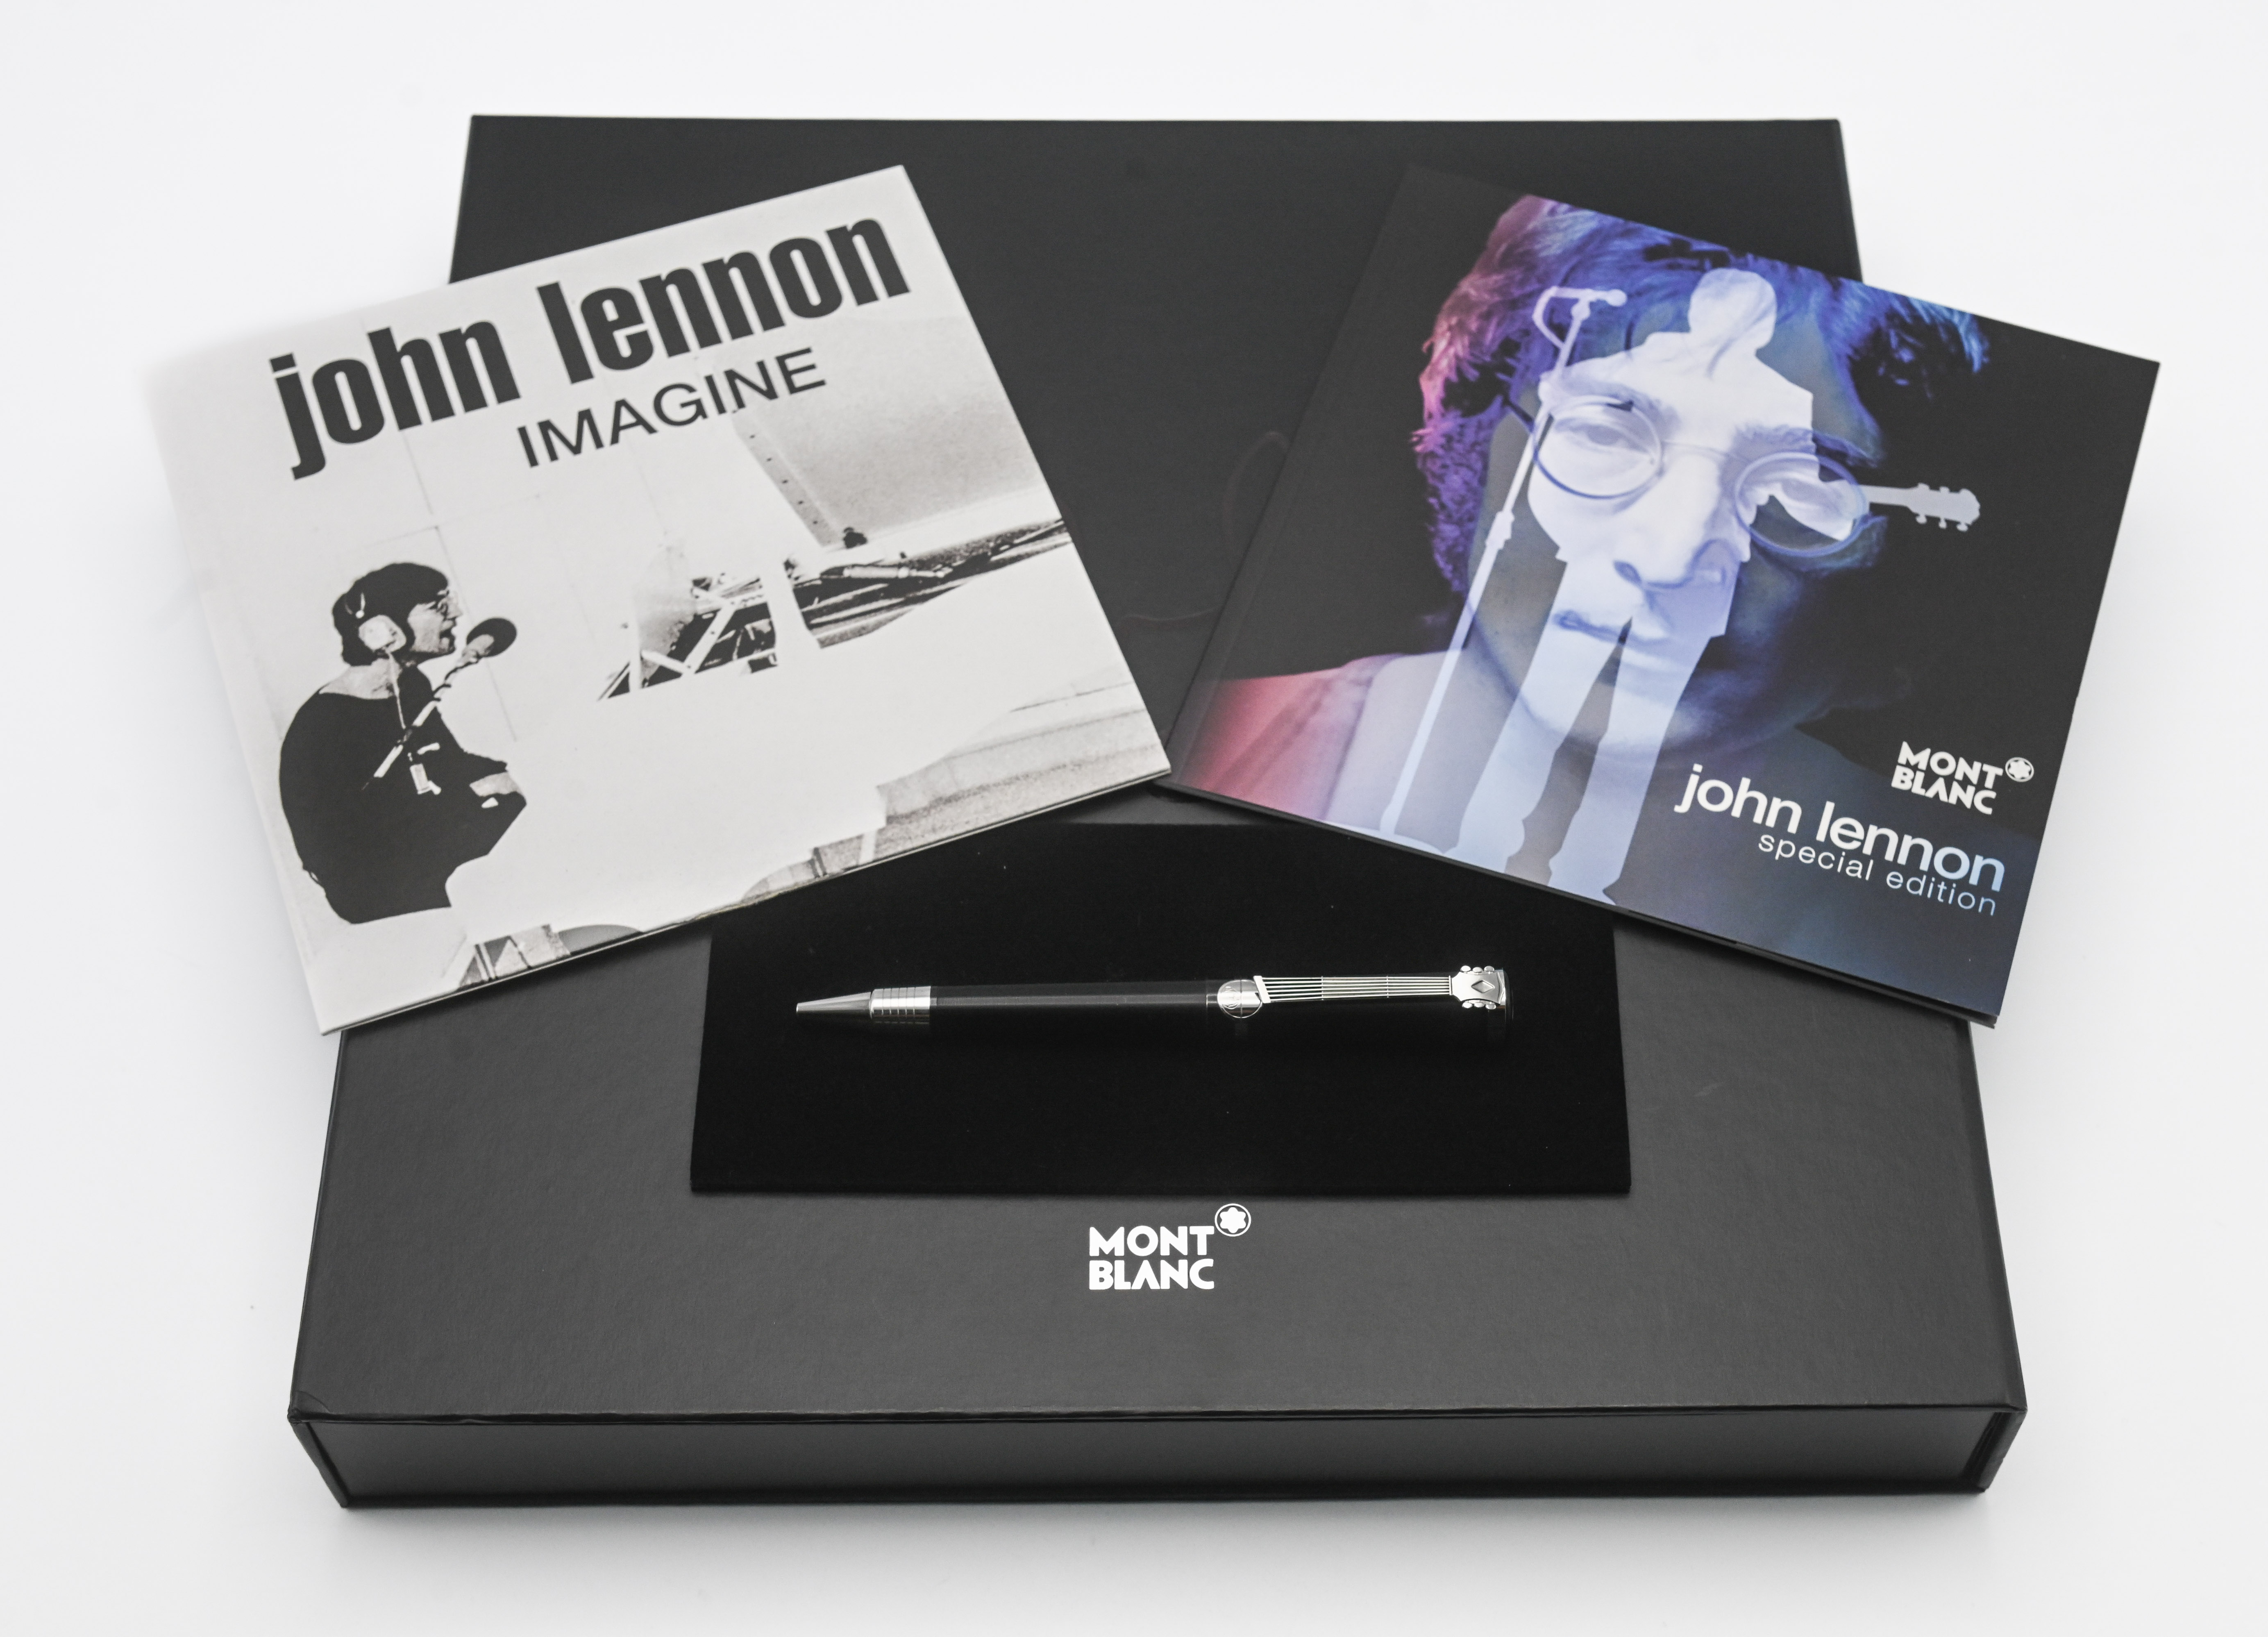 Mont Blanc, John Lennon special edition Ballpoint pen with Imagine vinyl record